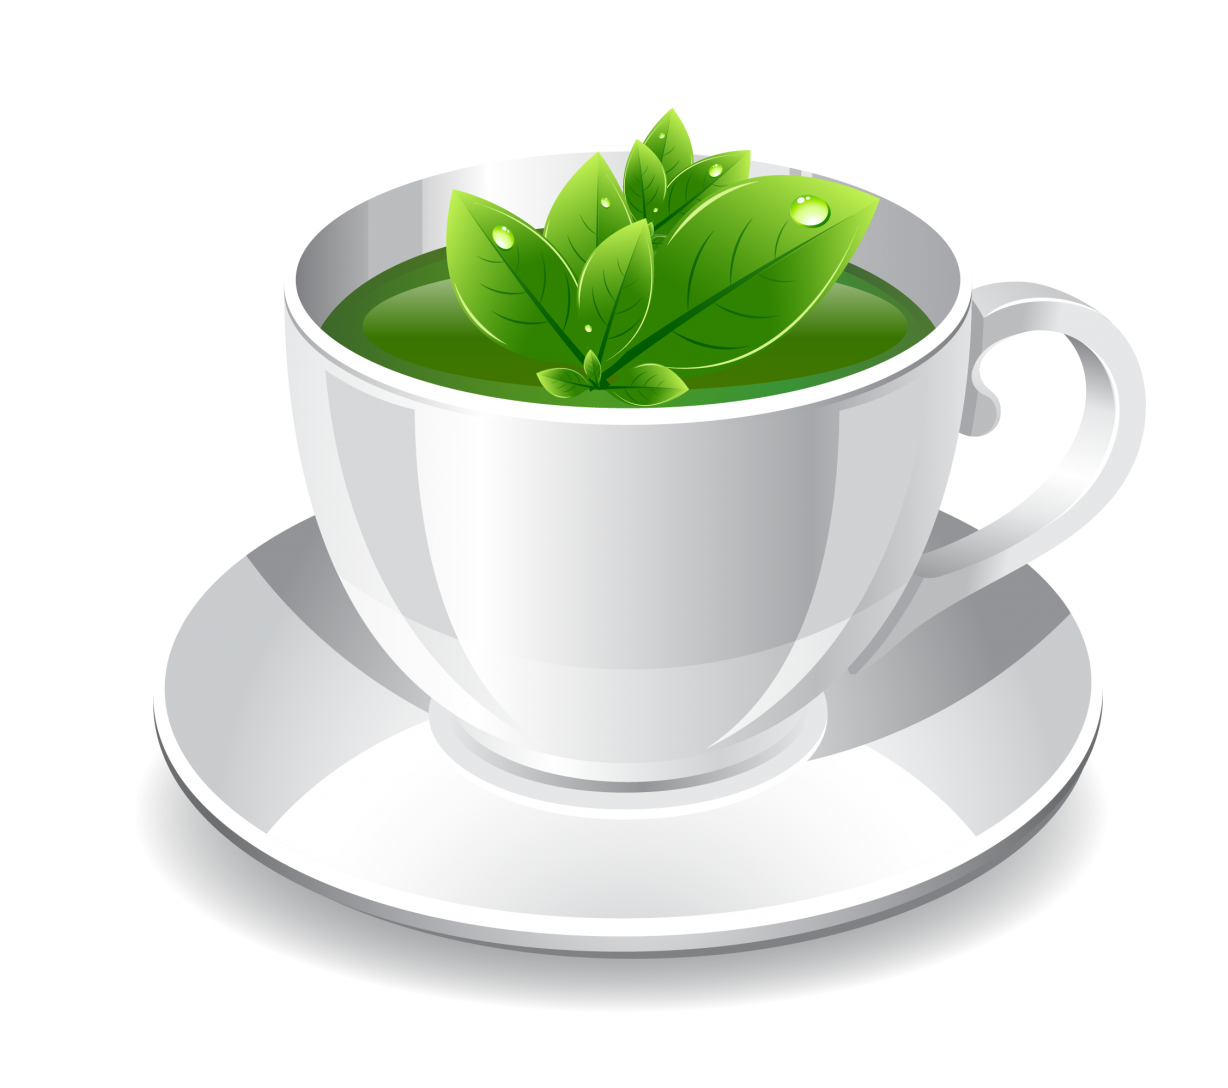 Green Tea Icon PNG HD Image 96502 1228x1088 Pixel